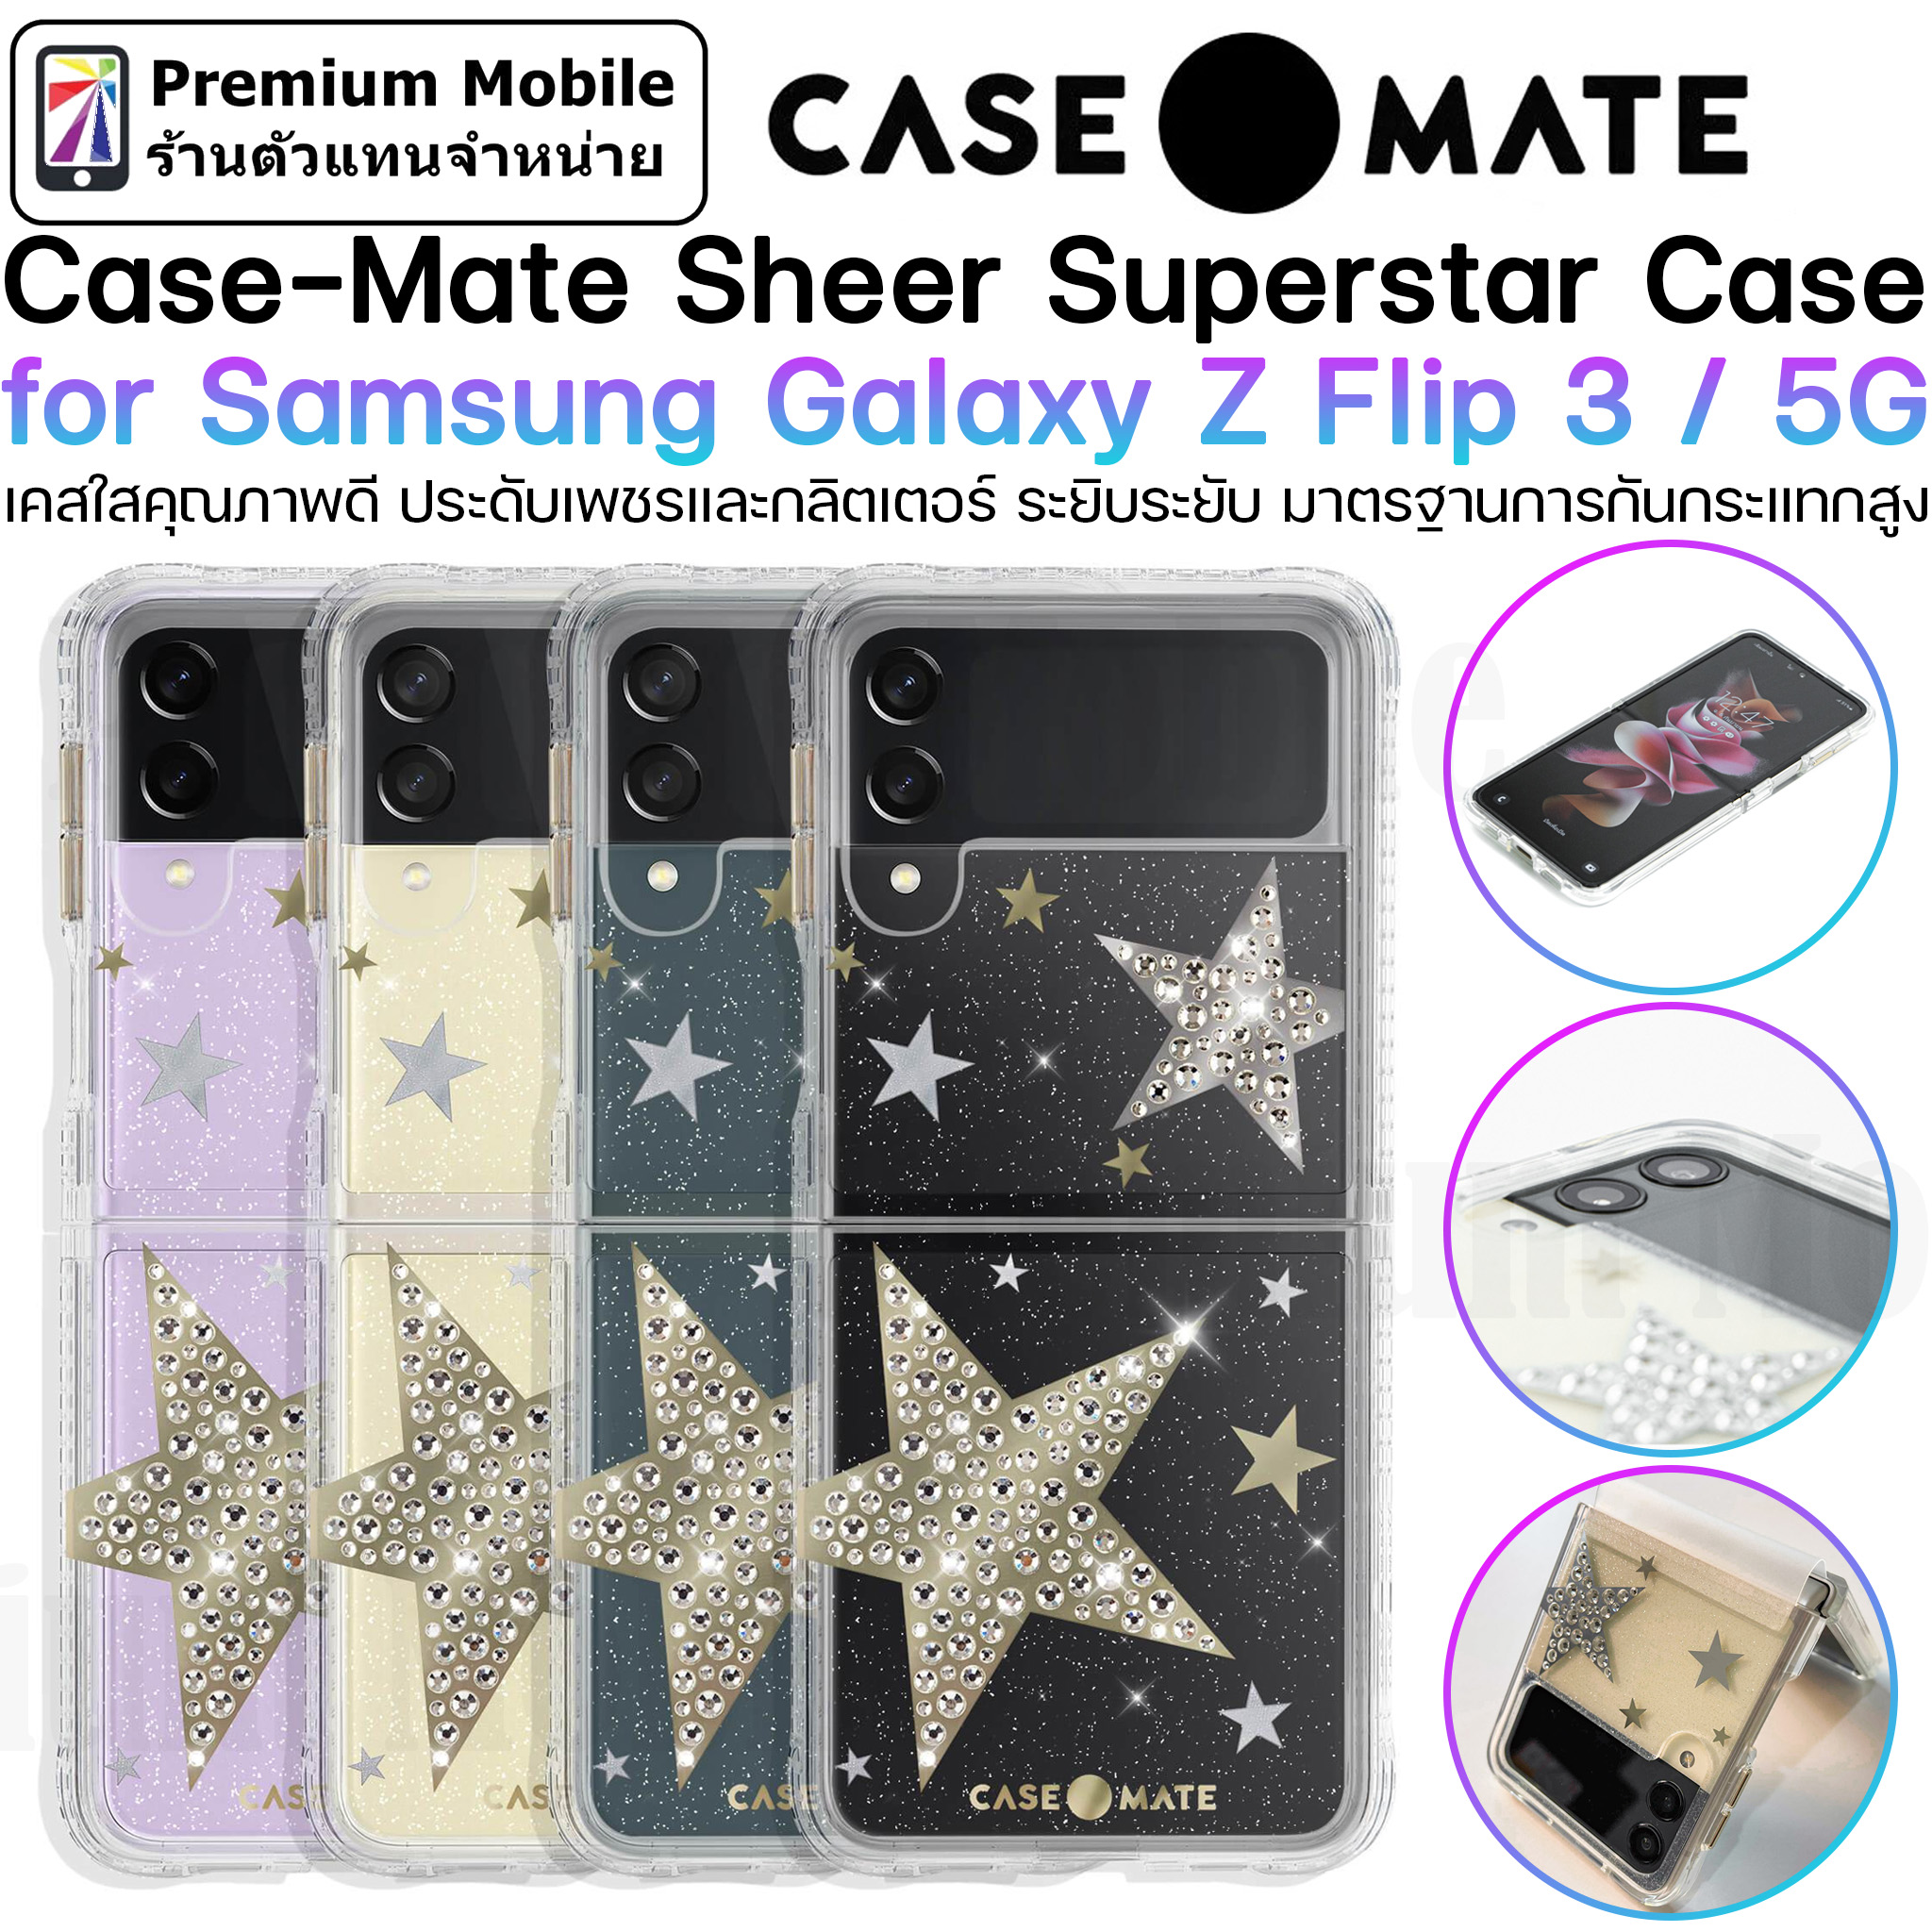 Case-Mate Sheer Superstar Case for Samsung Galaxy Z Flip - Sheer Superstar